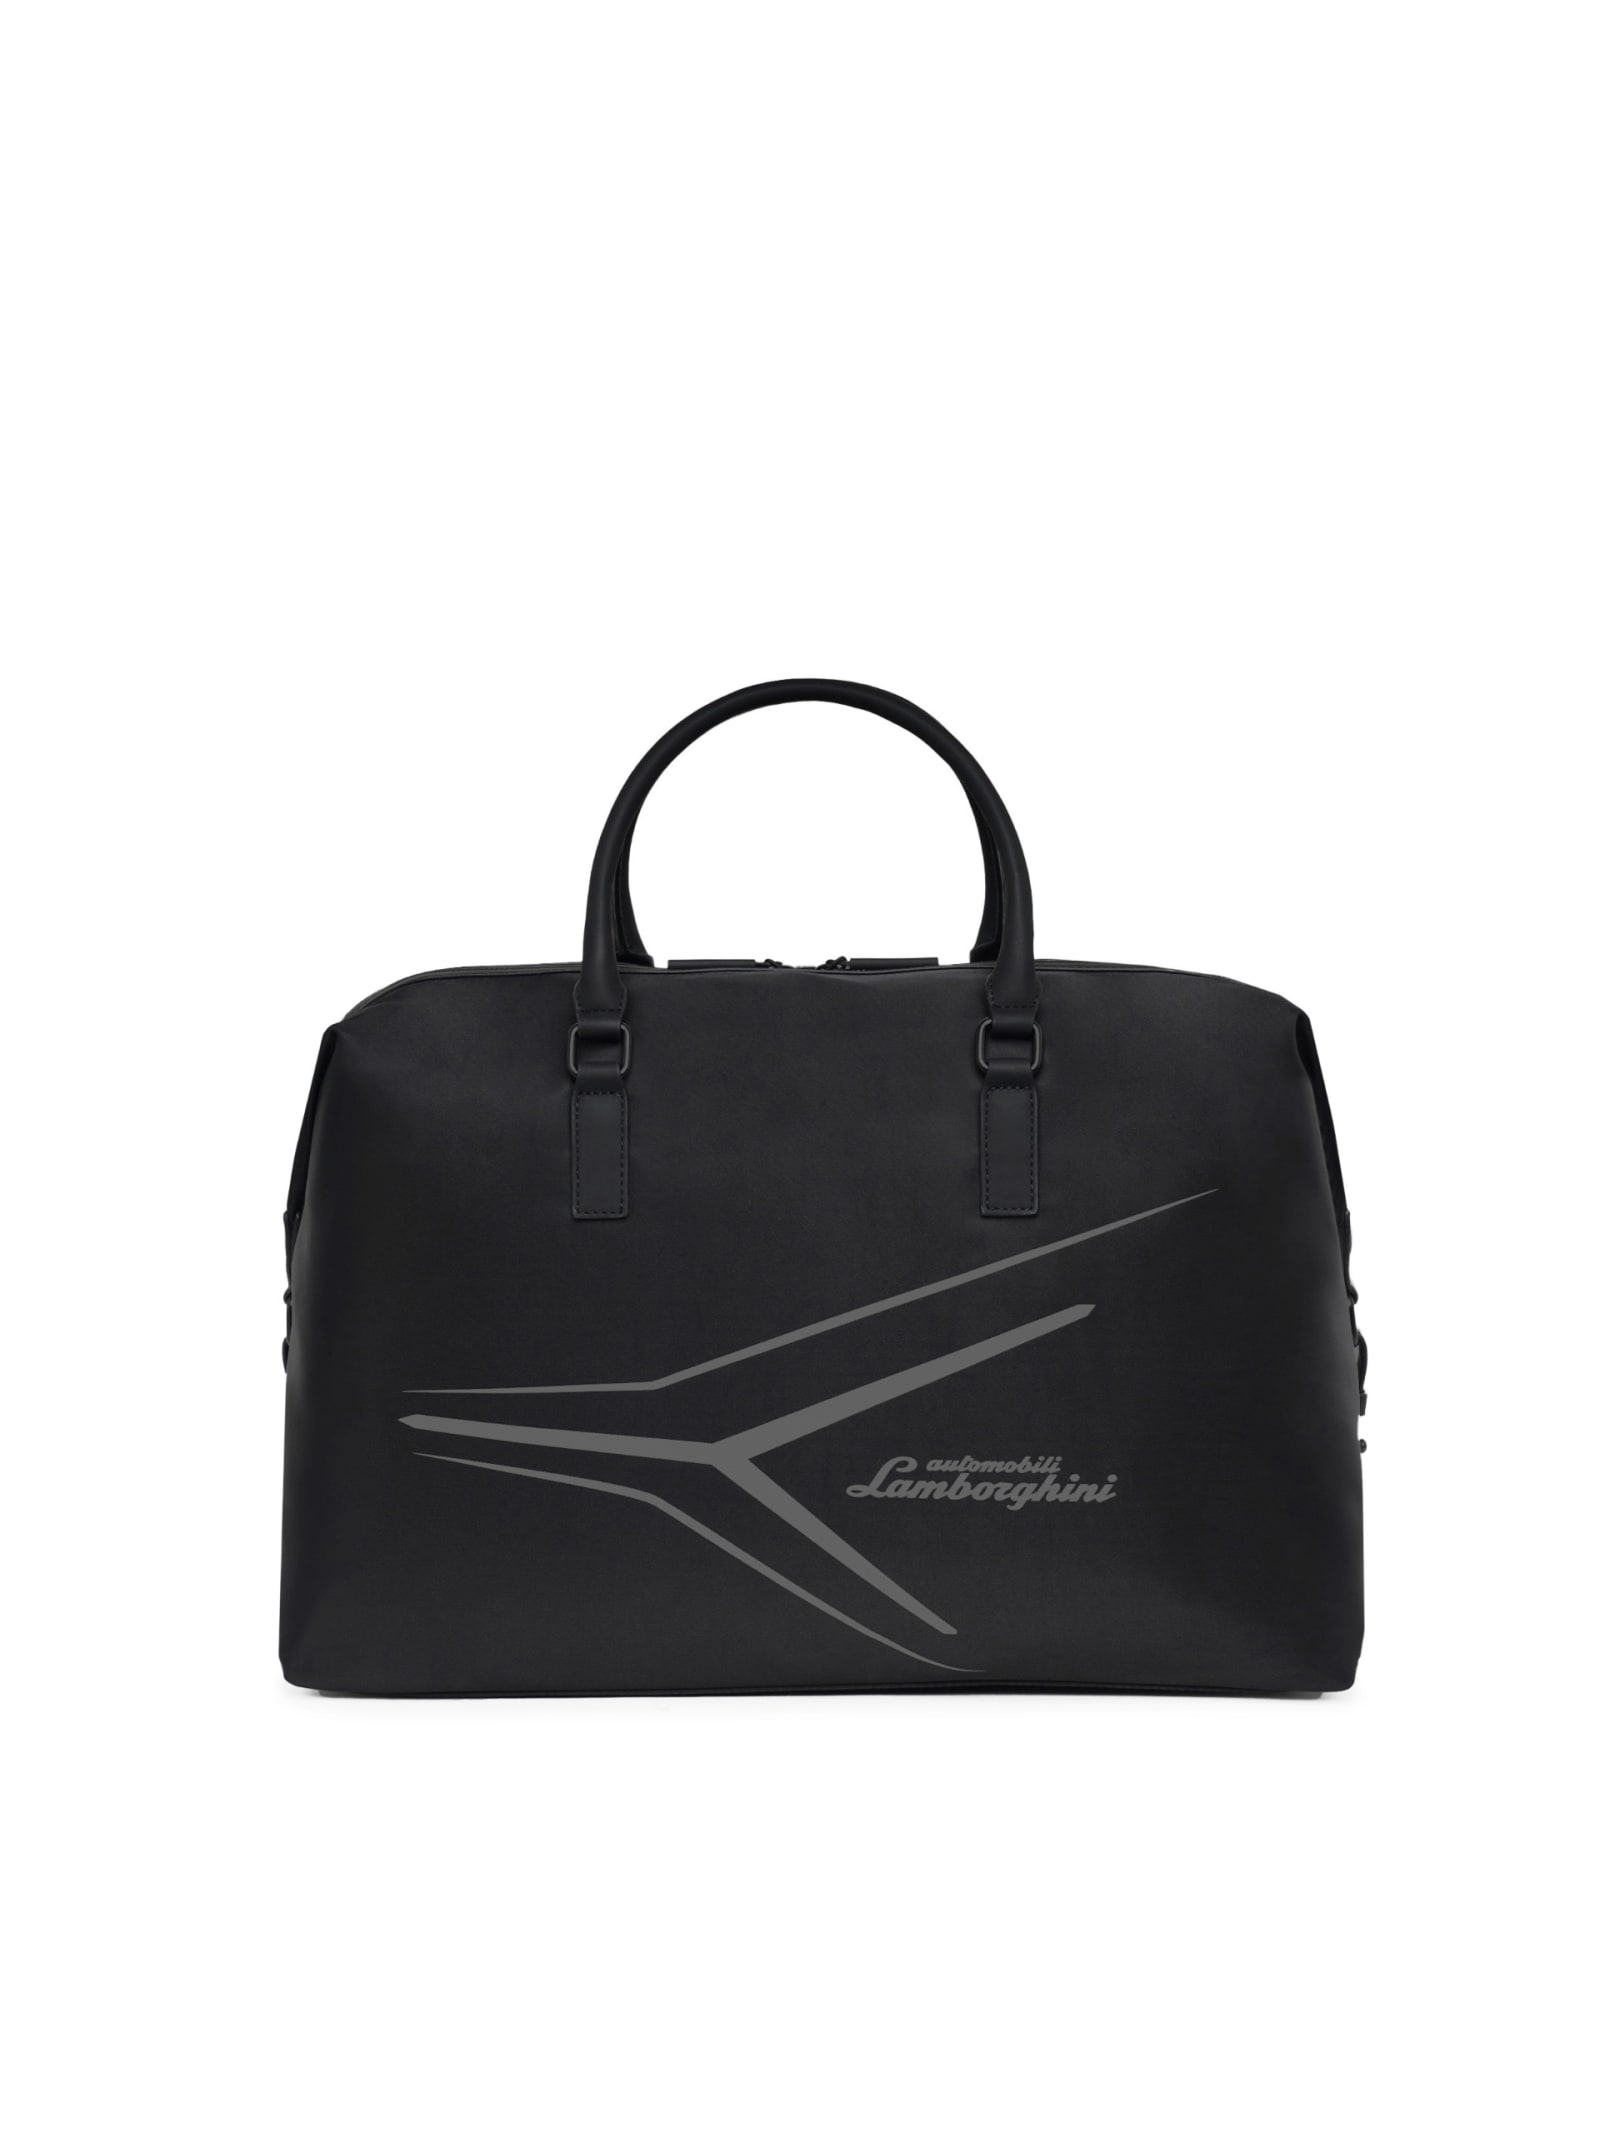 Automobili Lamborghini Weekend Bag With Reflex Print